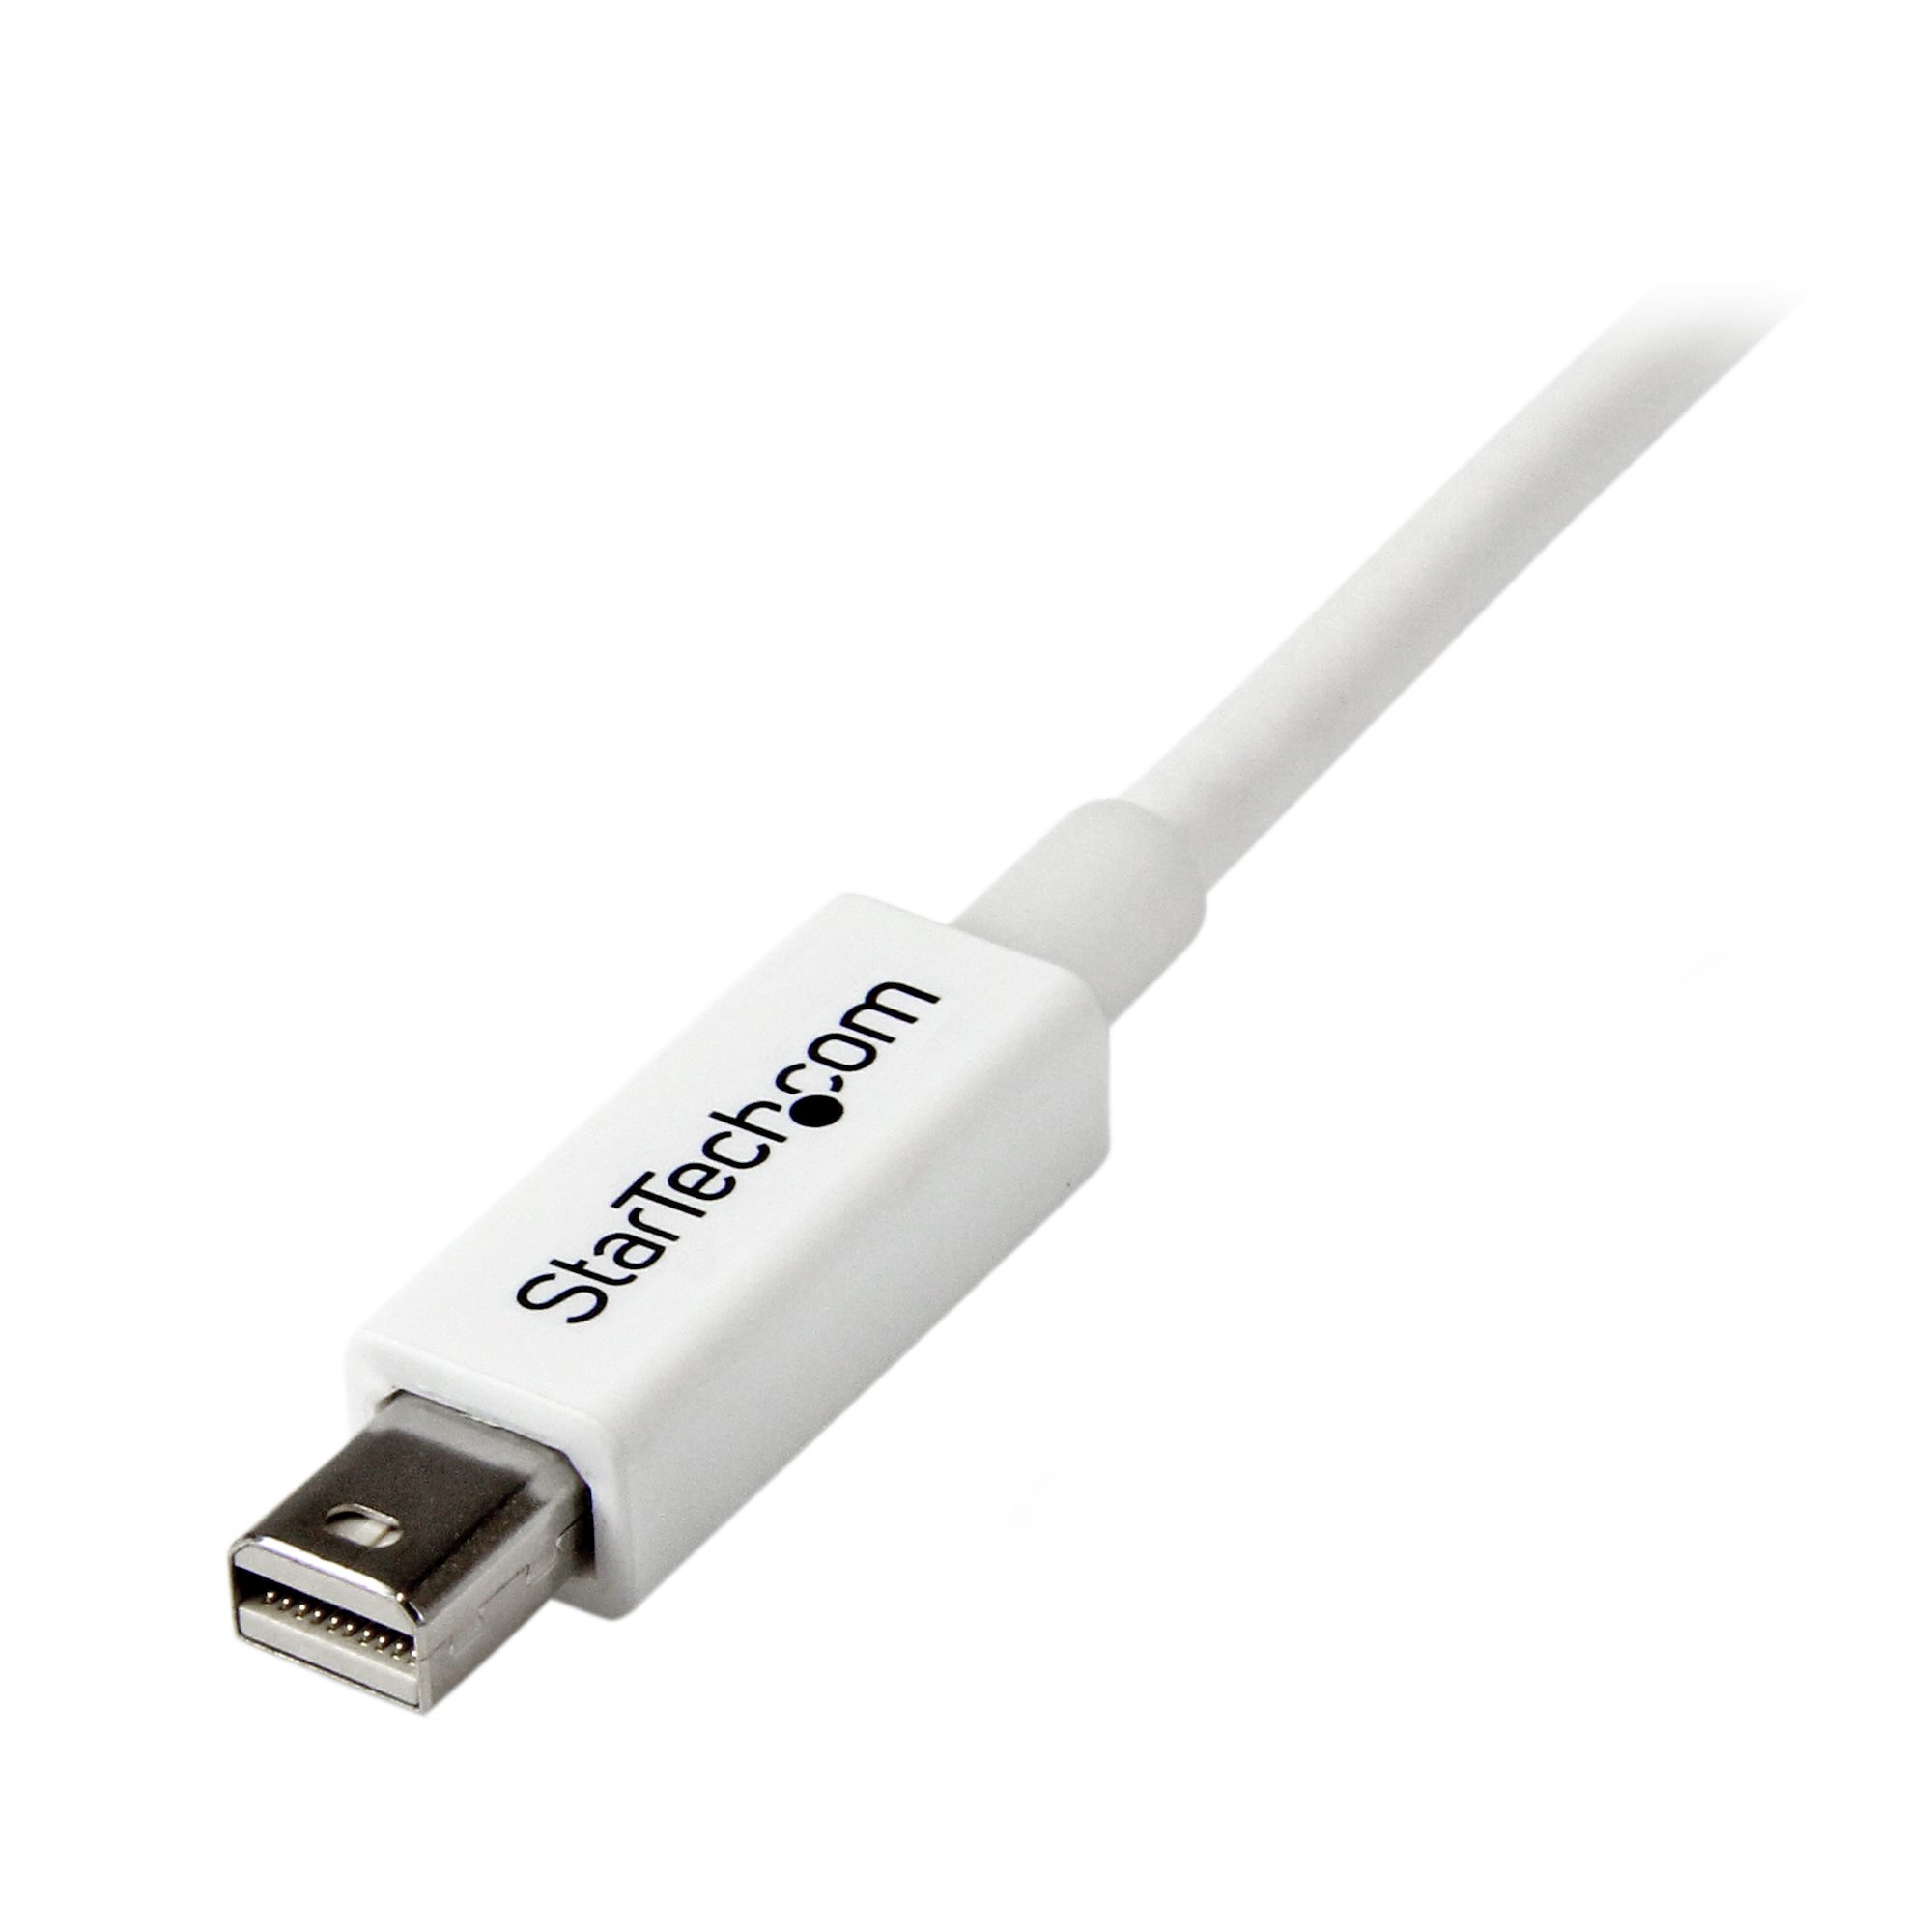 1m White Thunderbolt Cable M/M (TBOLTMM1MW) Cables | StarTech.com